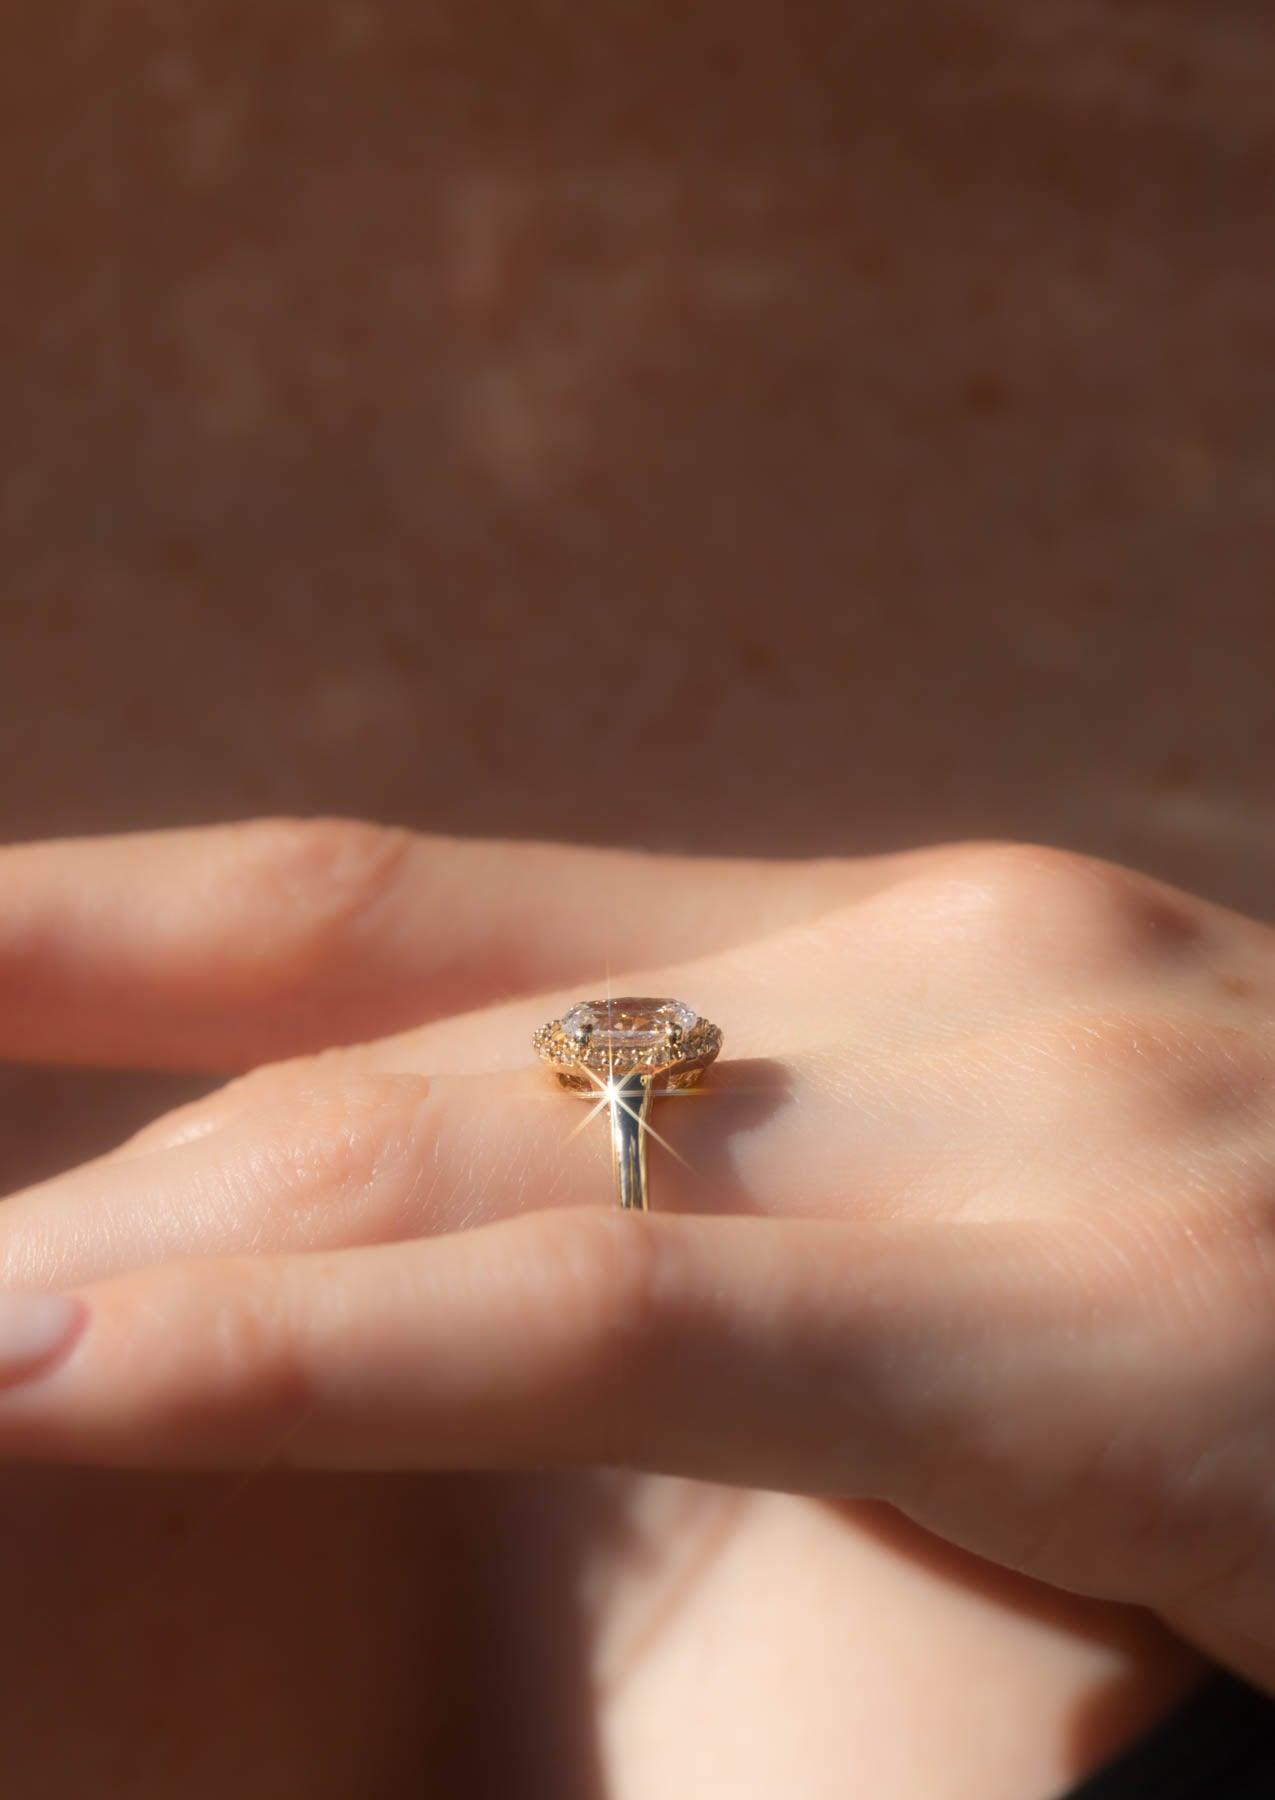 The Iris Rose Gold Cultured Diamond Ring